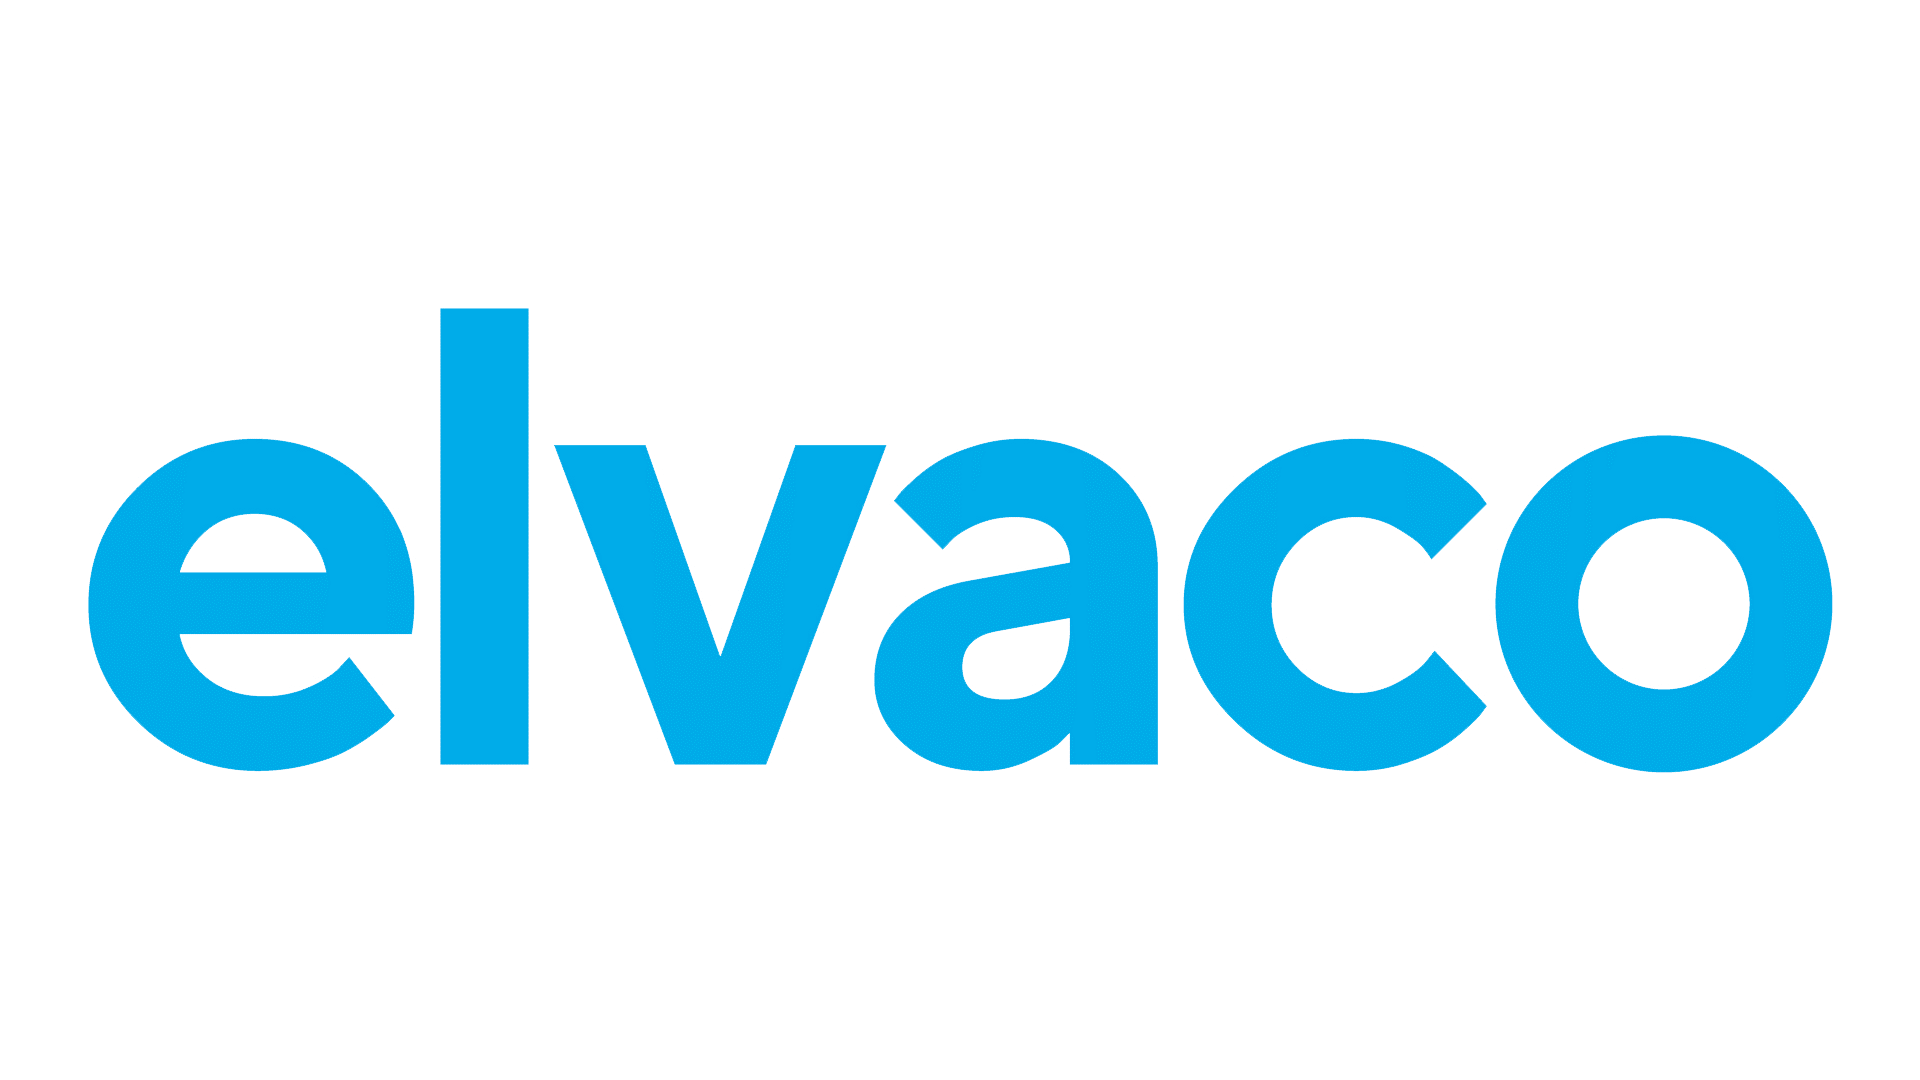 Elvaco logo